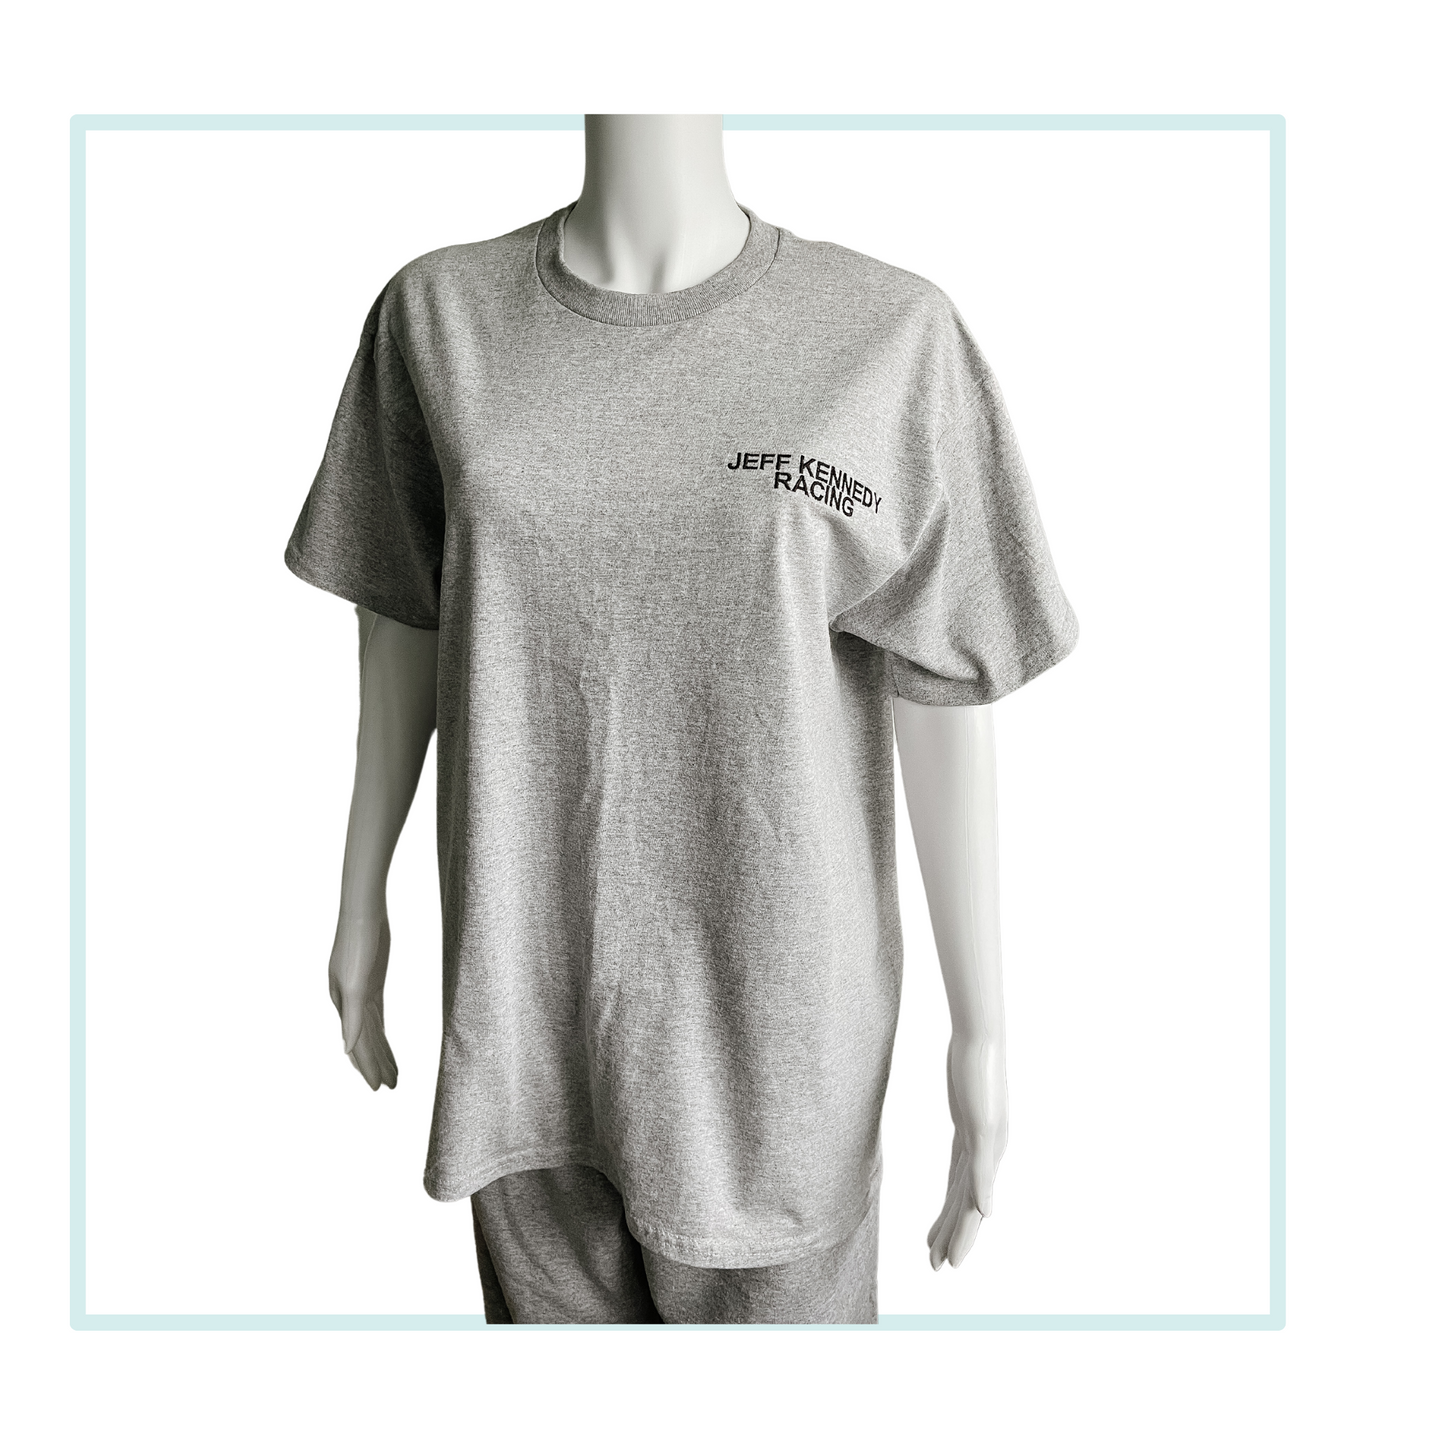 Adult Custom Embroidered TShirts- Premium brand